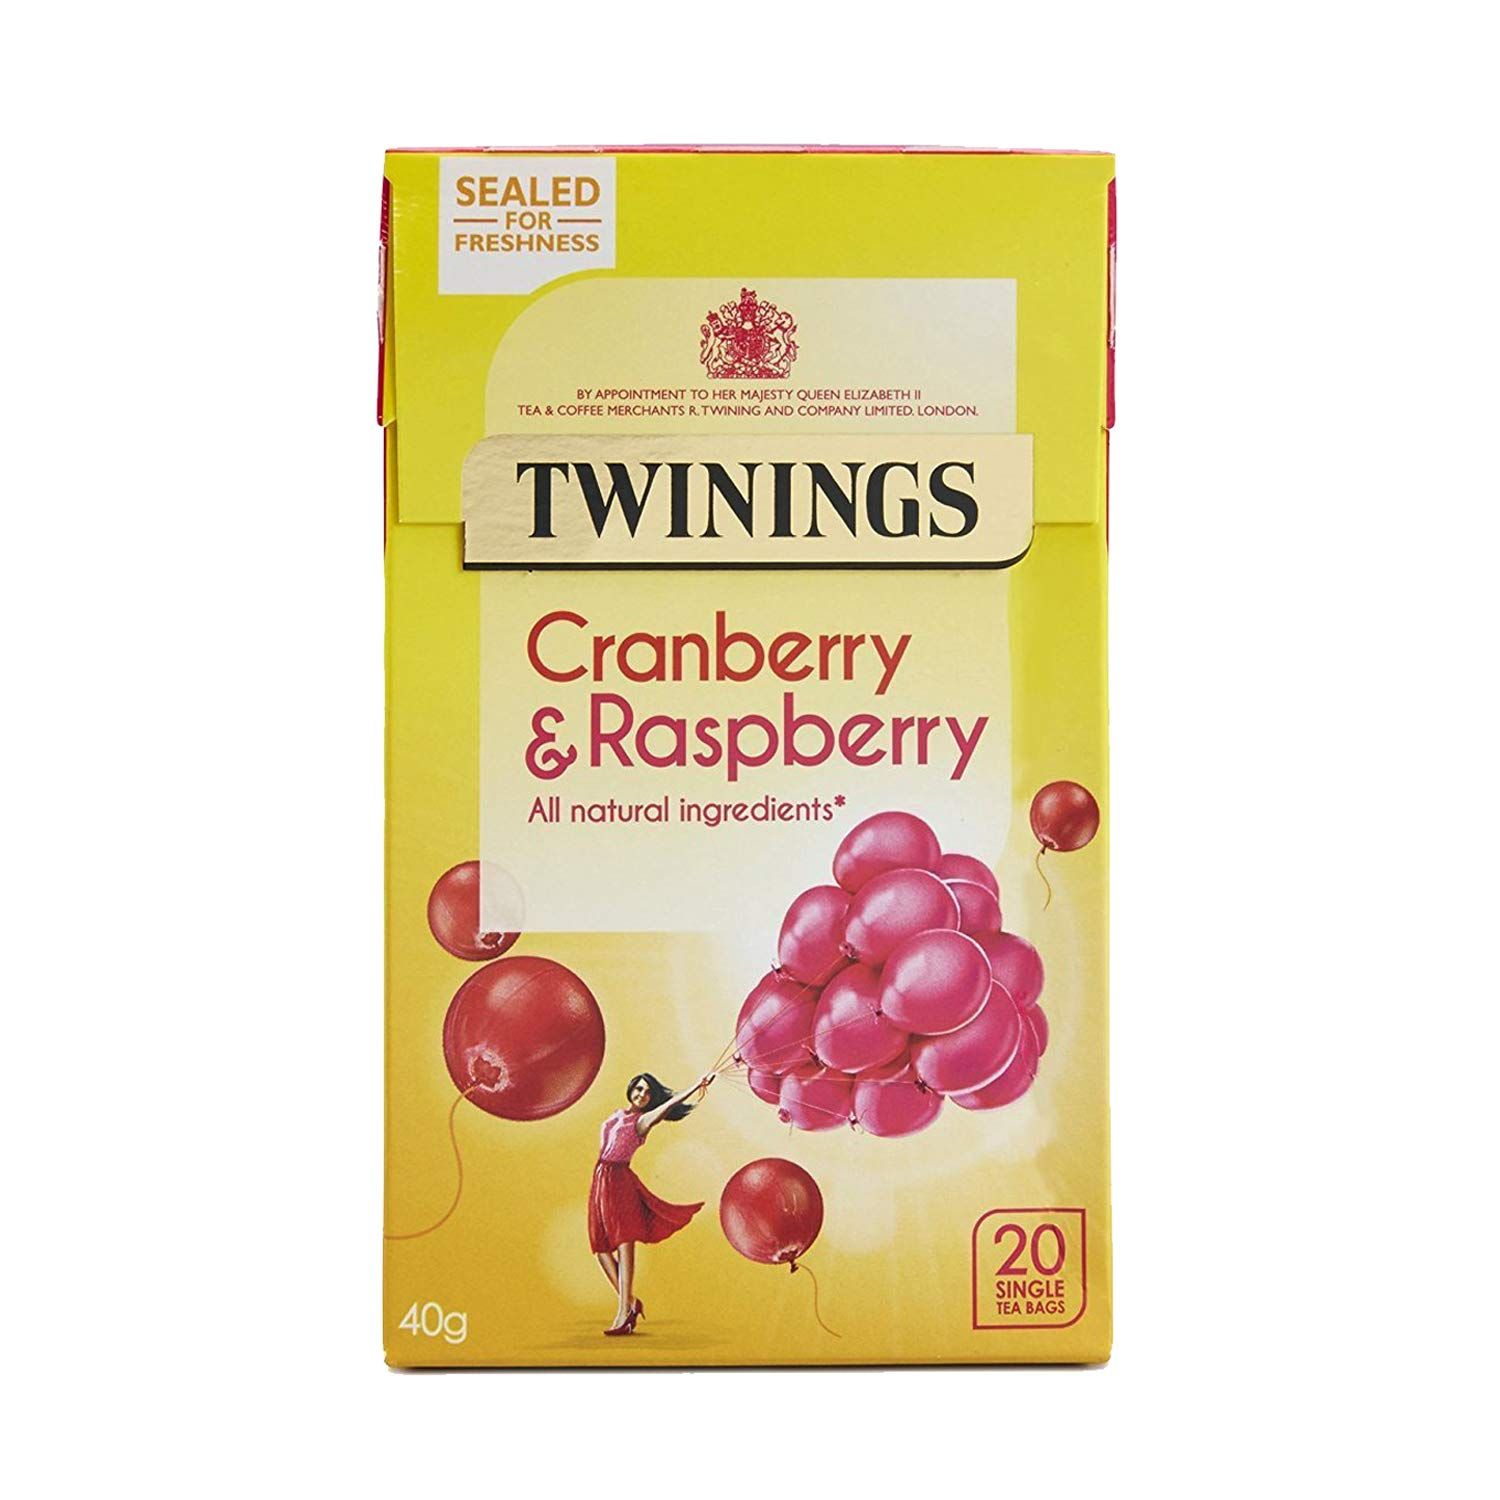 Twinings Cranberry & Raspberry Image